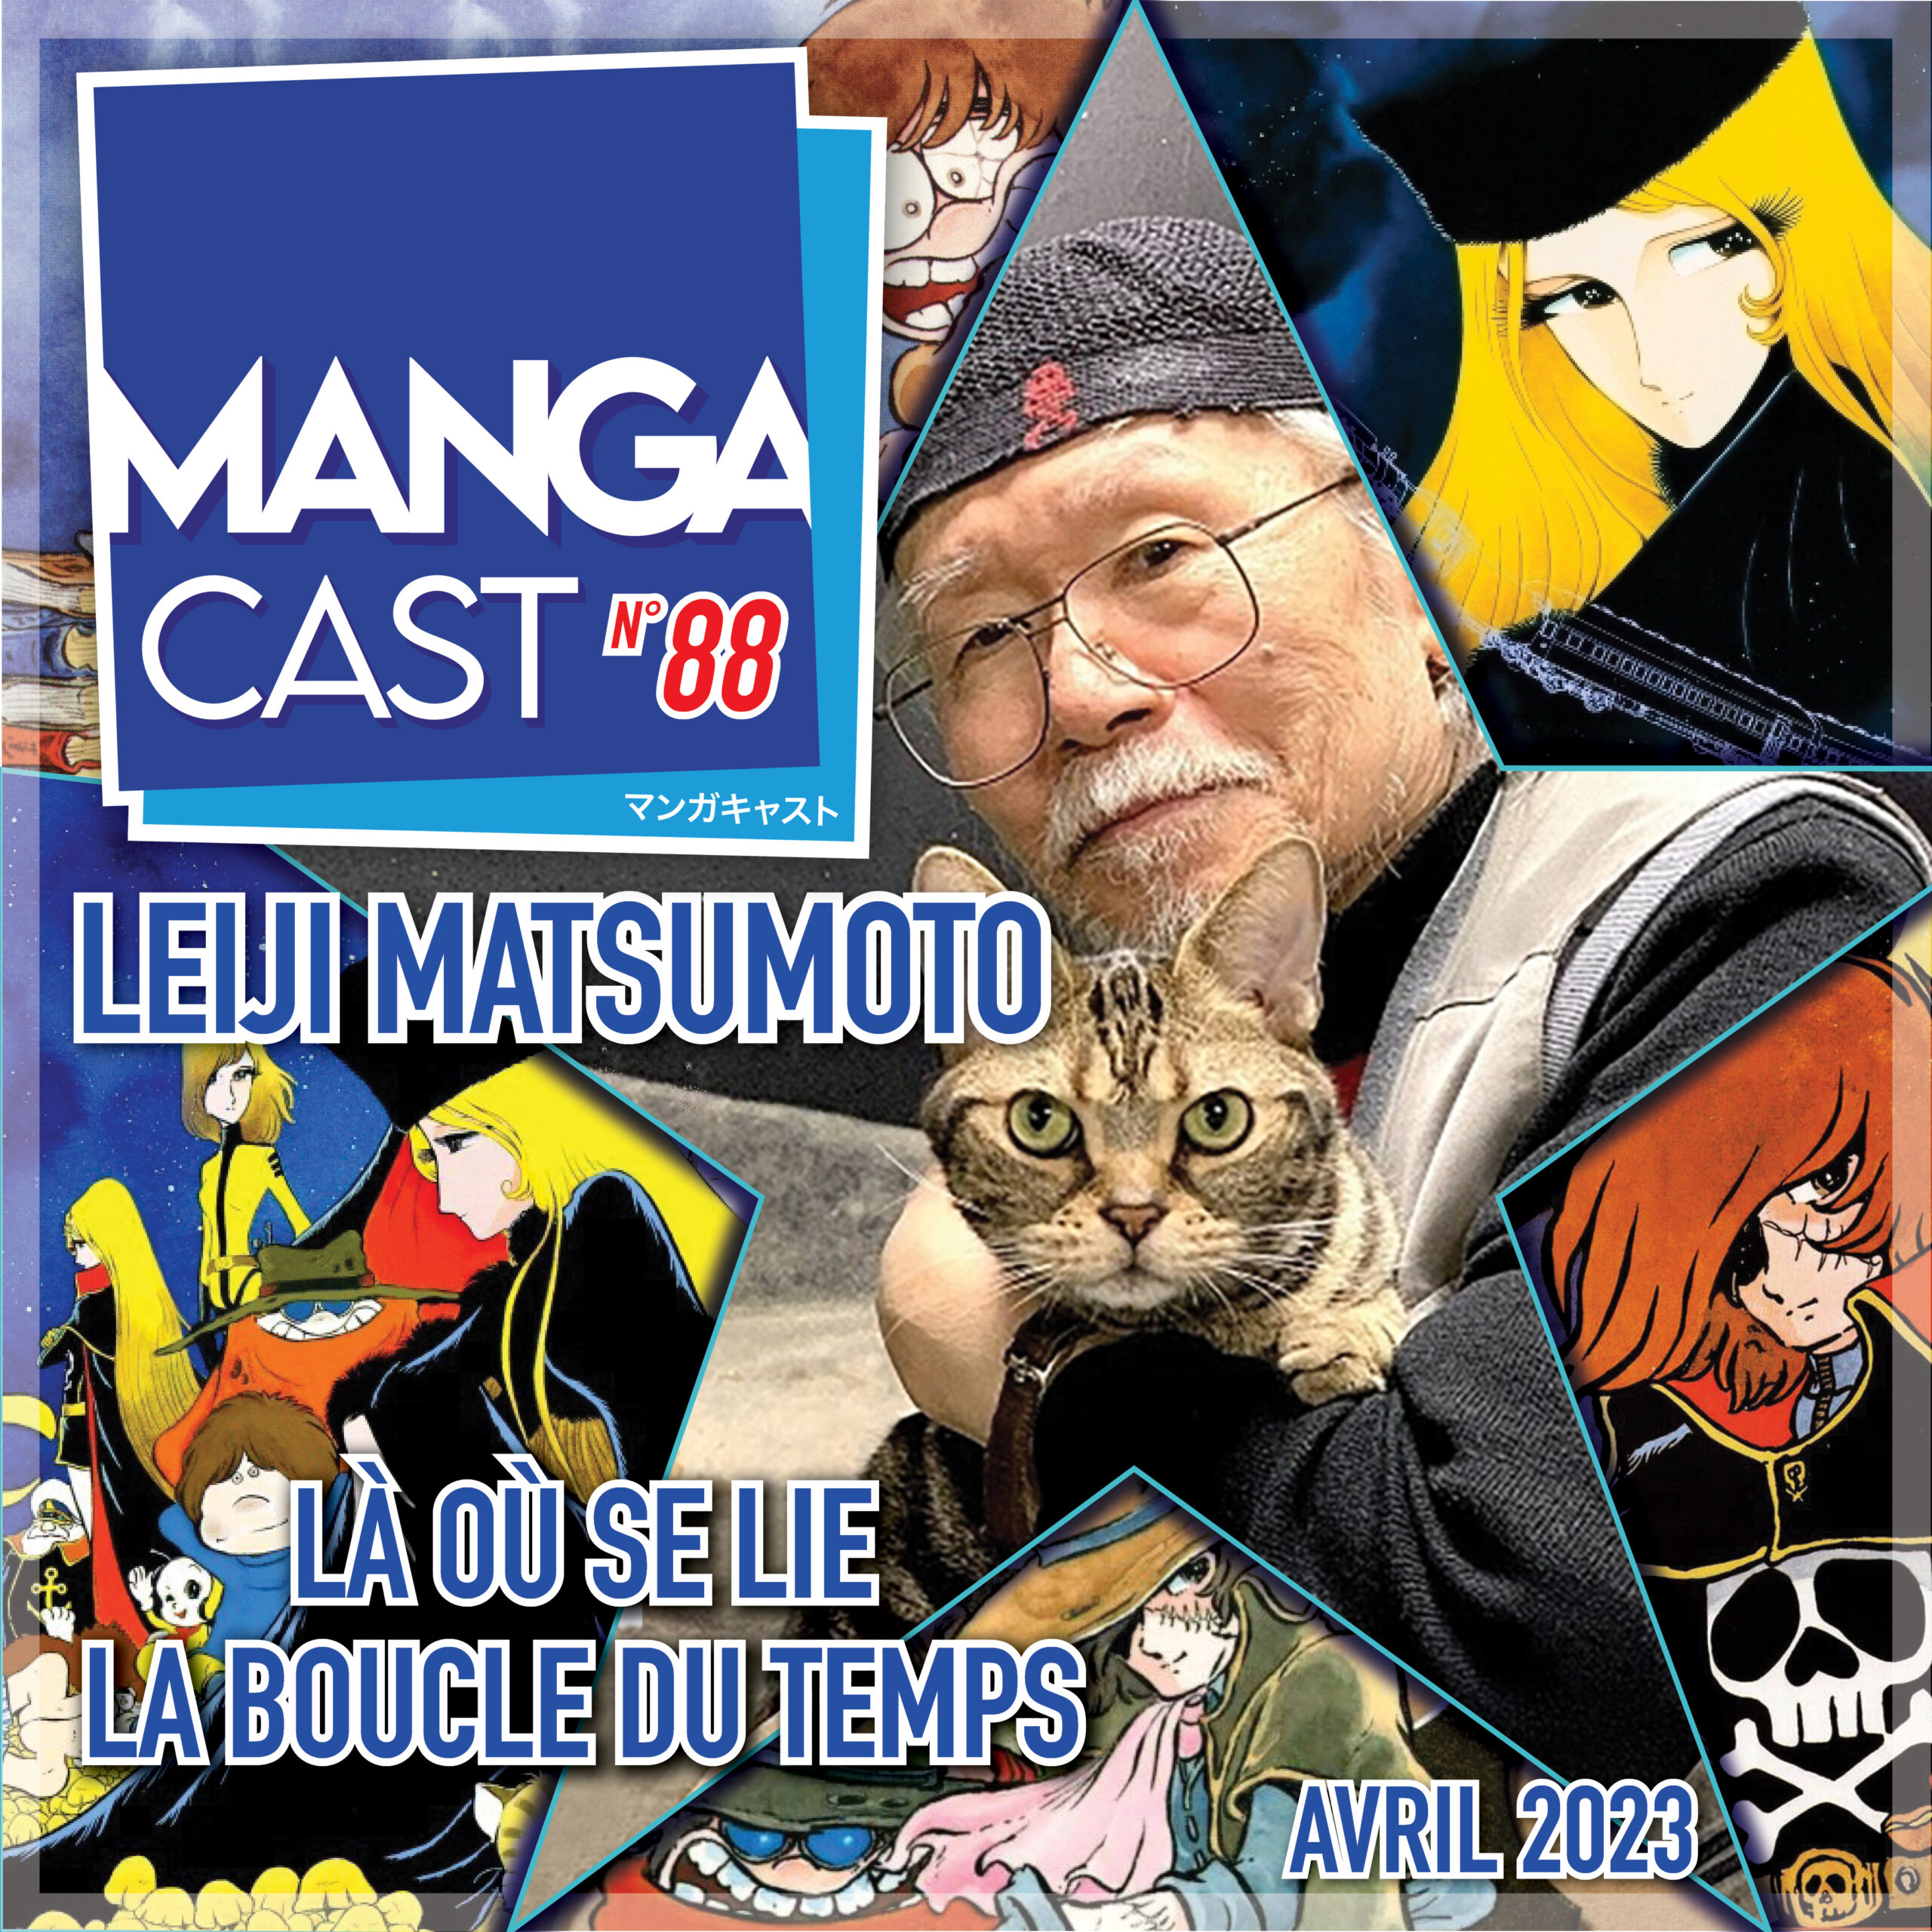 Cartouche du Mangacast n°88 sur Leiji Matsumoto